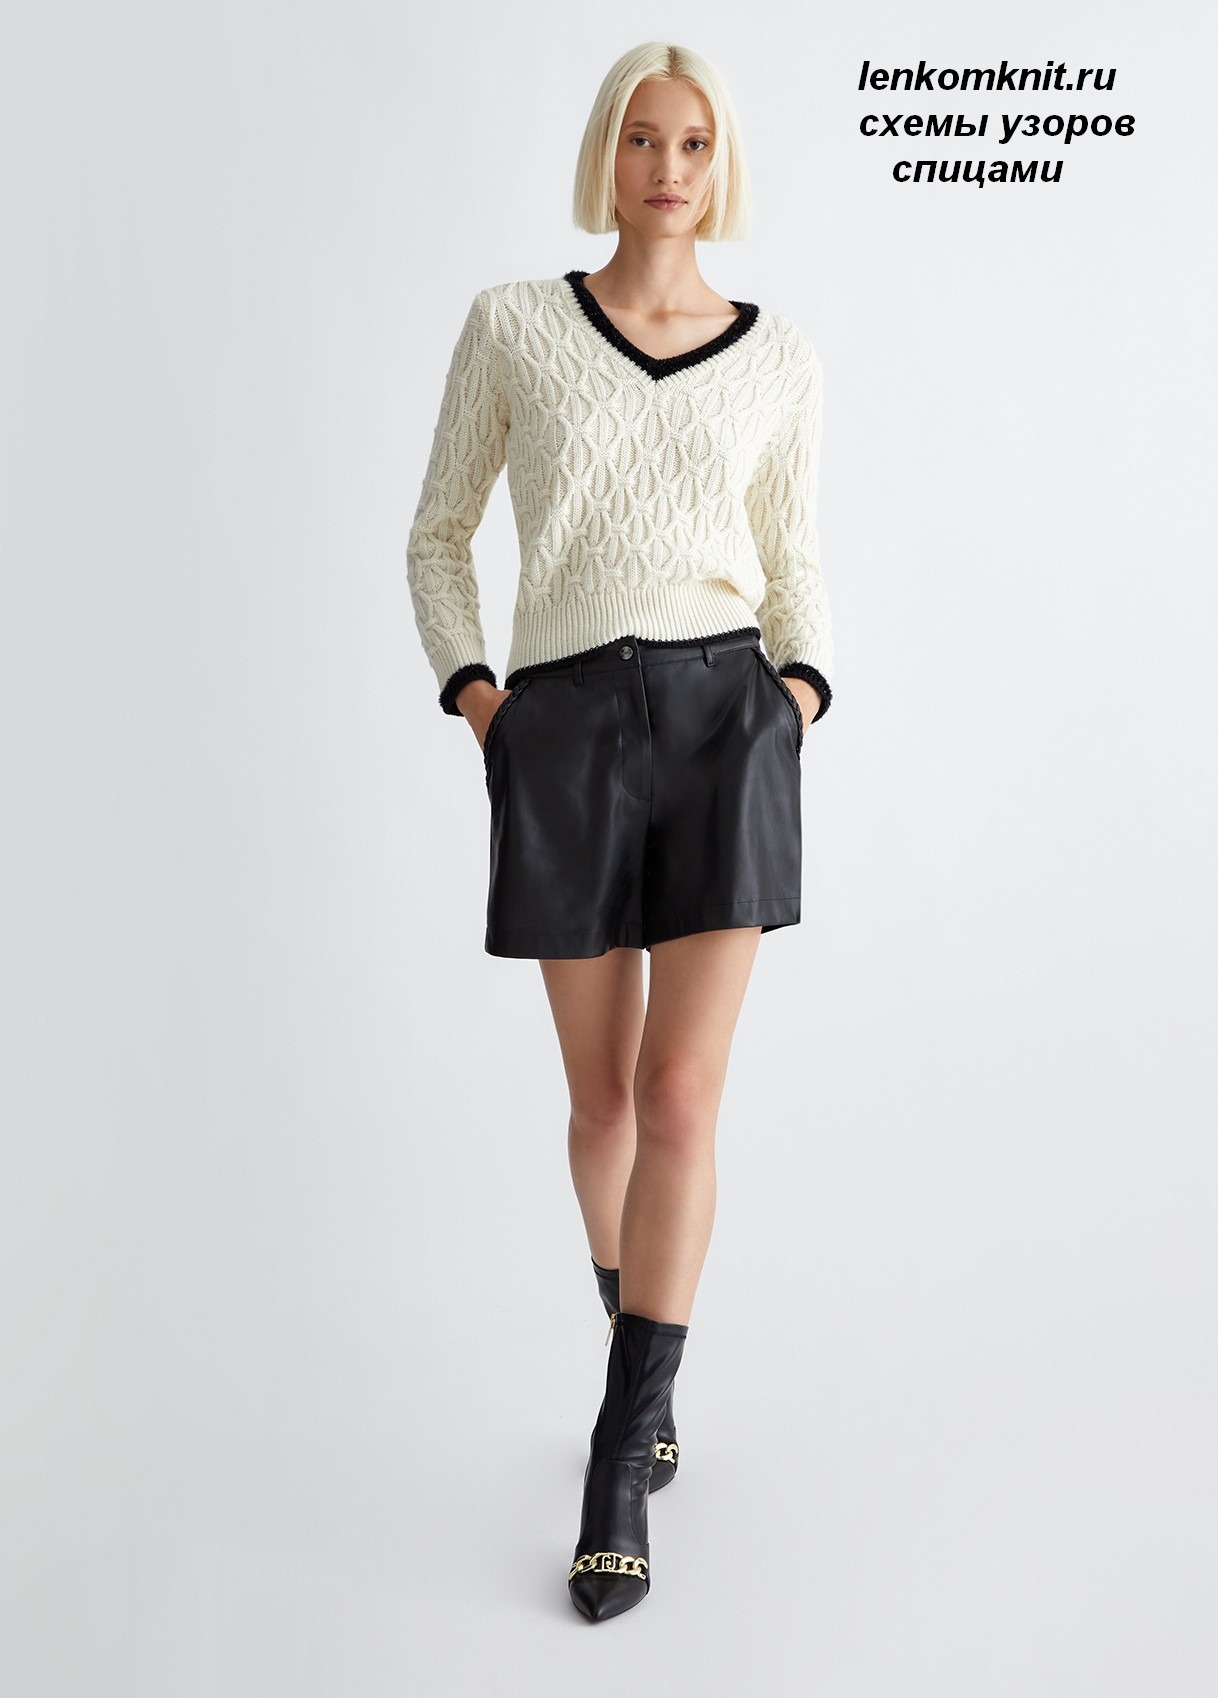 Пуловер от Liu Jo. Схема узора